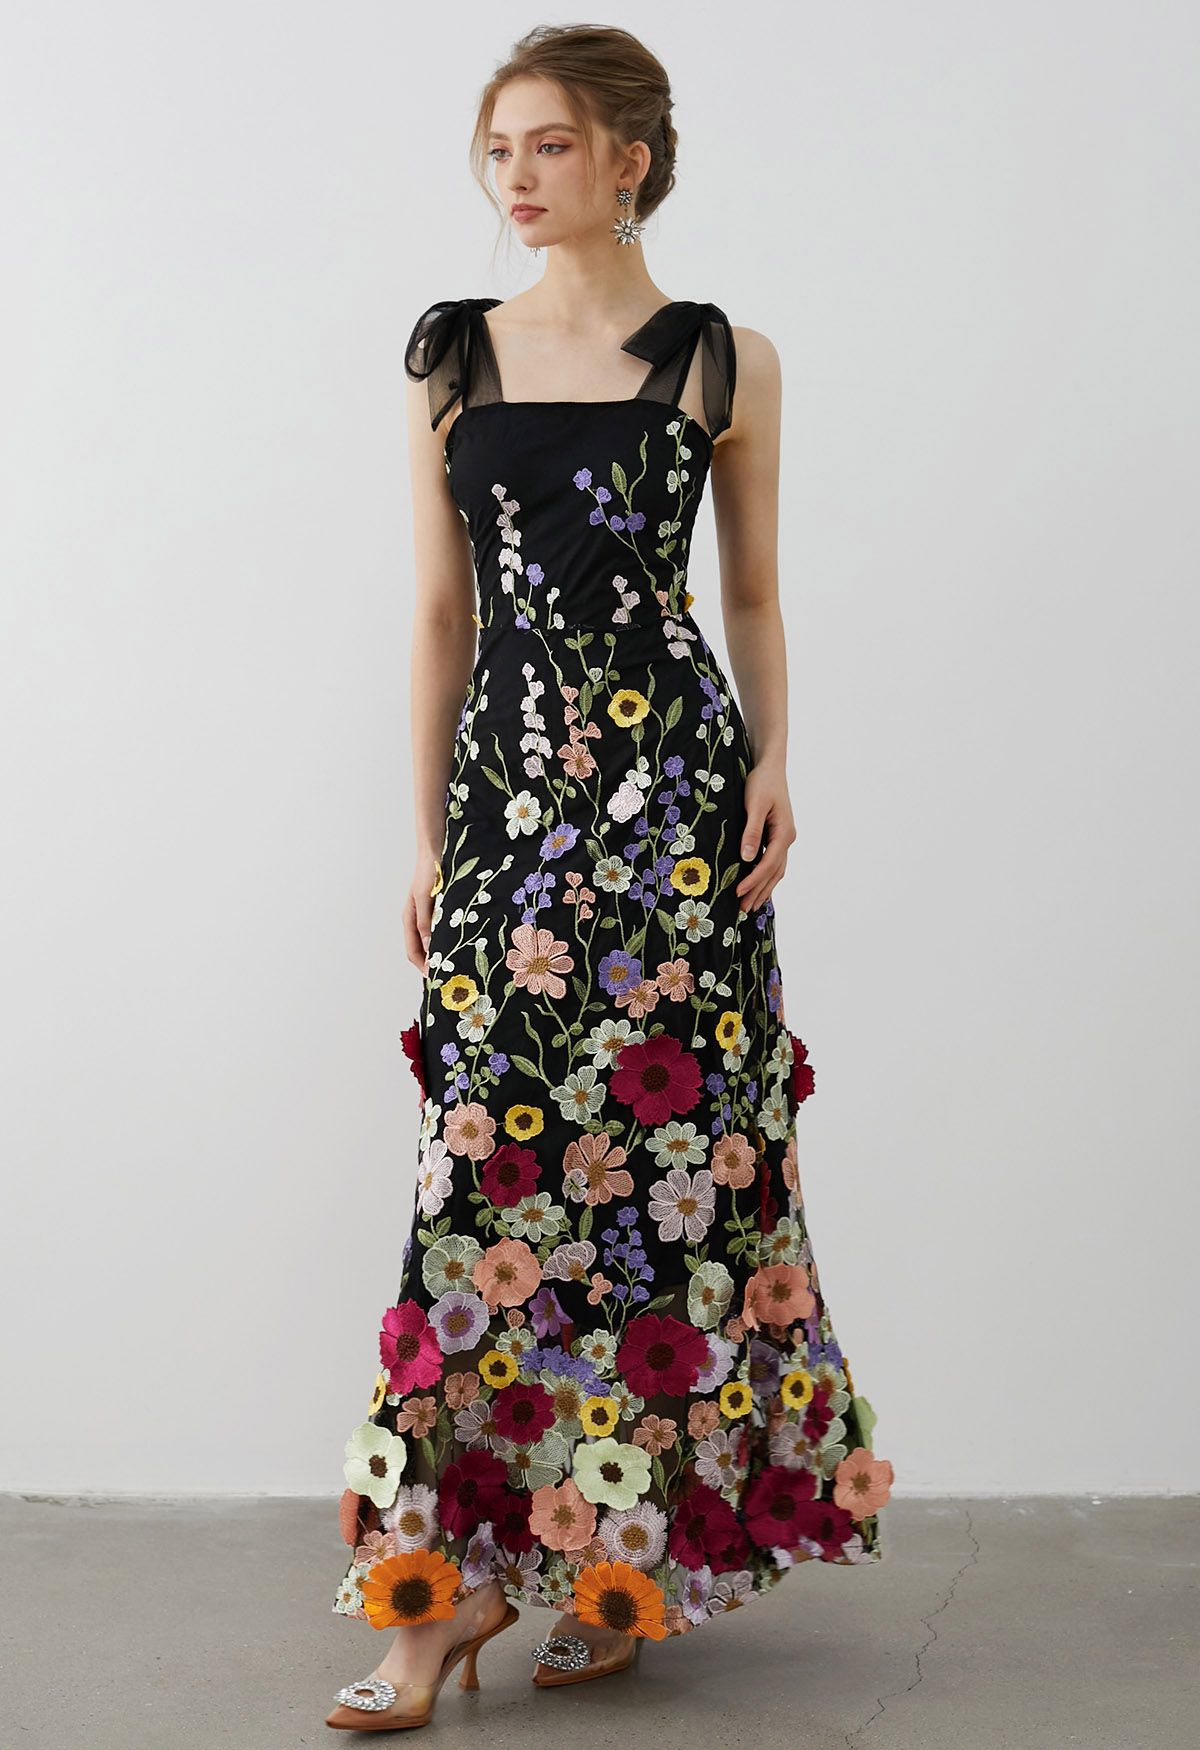 3D Floral Applique Tie-Strap Mesh Tulle Maxi Dress in Black